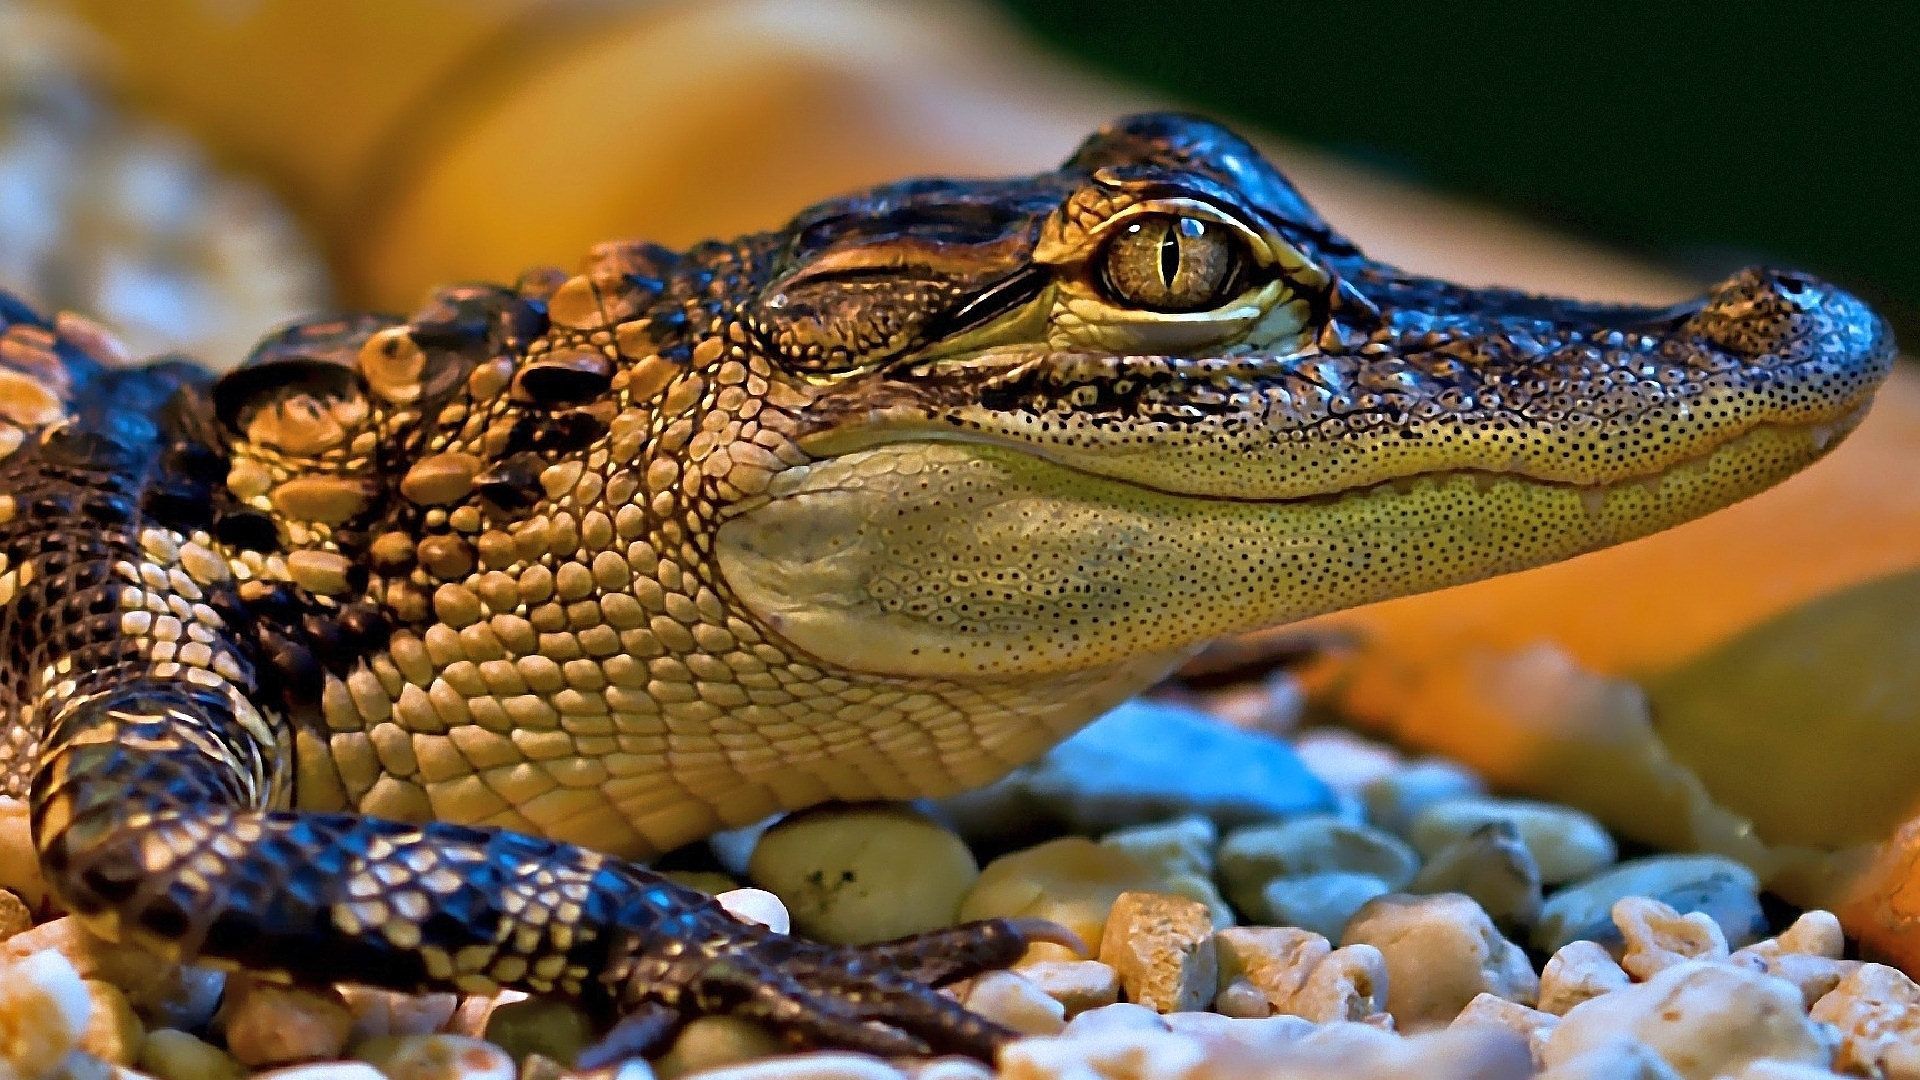 Crocodile HD Wallpaper. Wild animals picture, Baby alligator